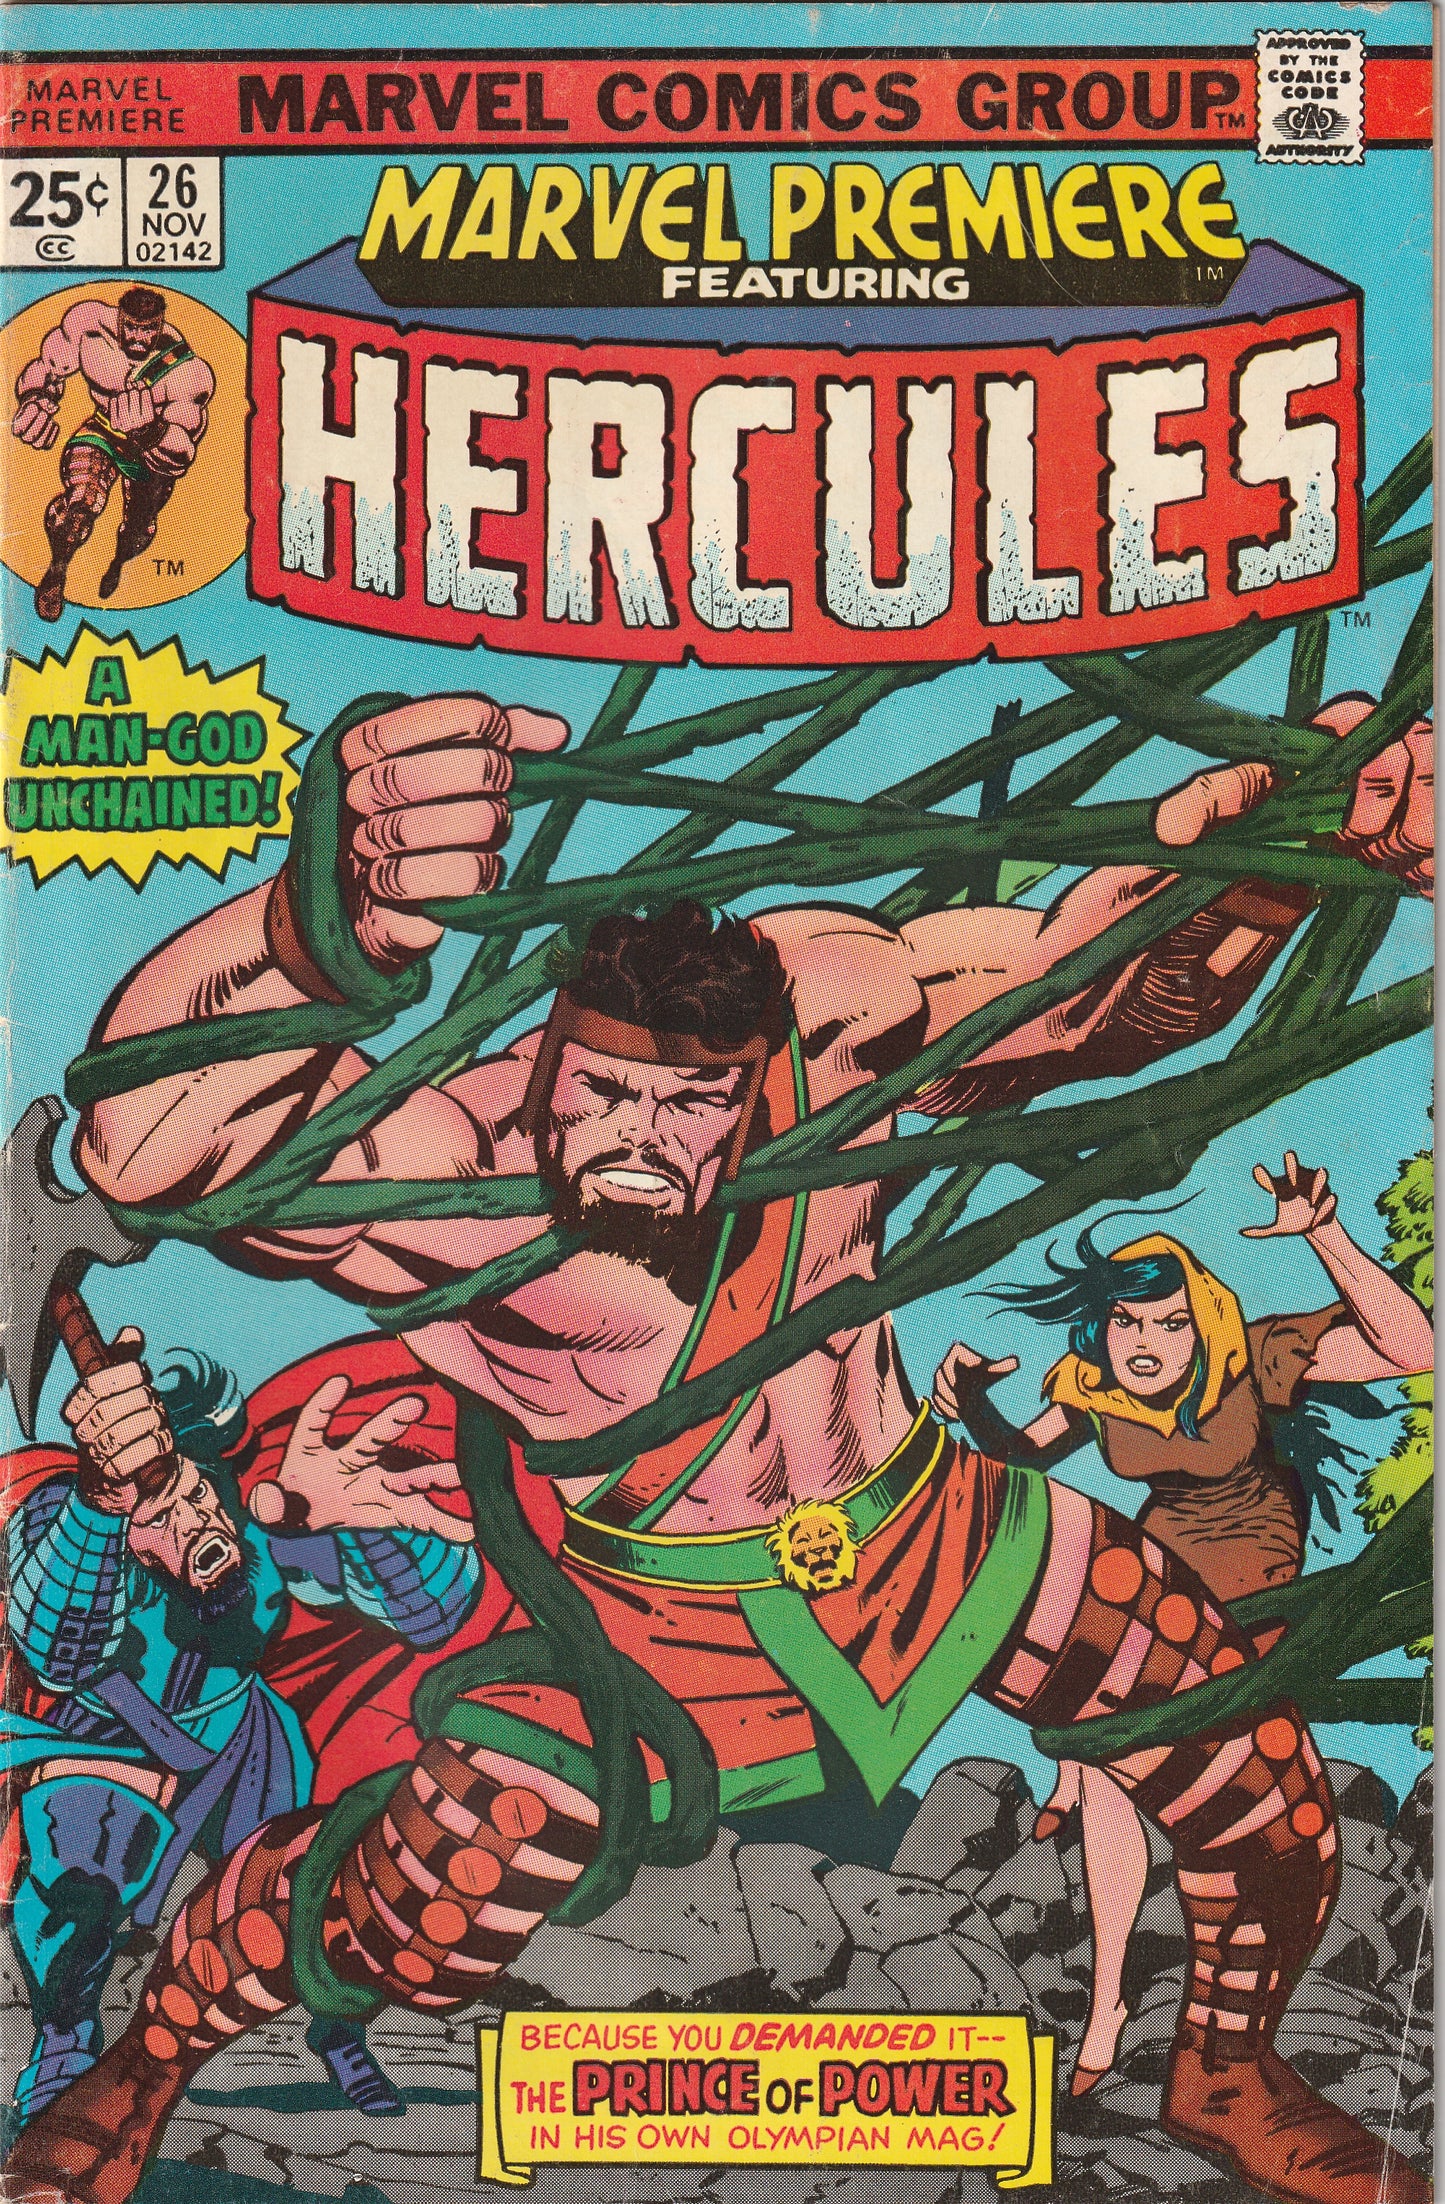 Marvel Premiere #26 (1975) Featuring Hercules